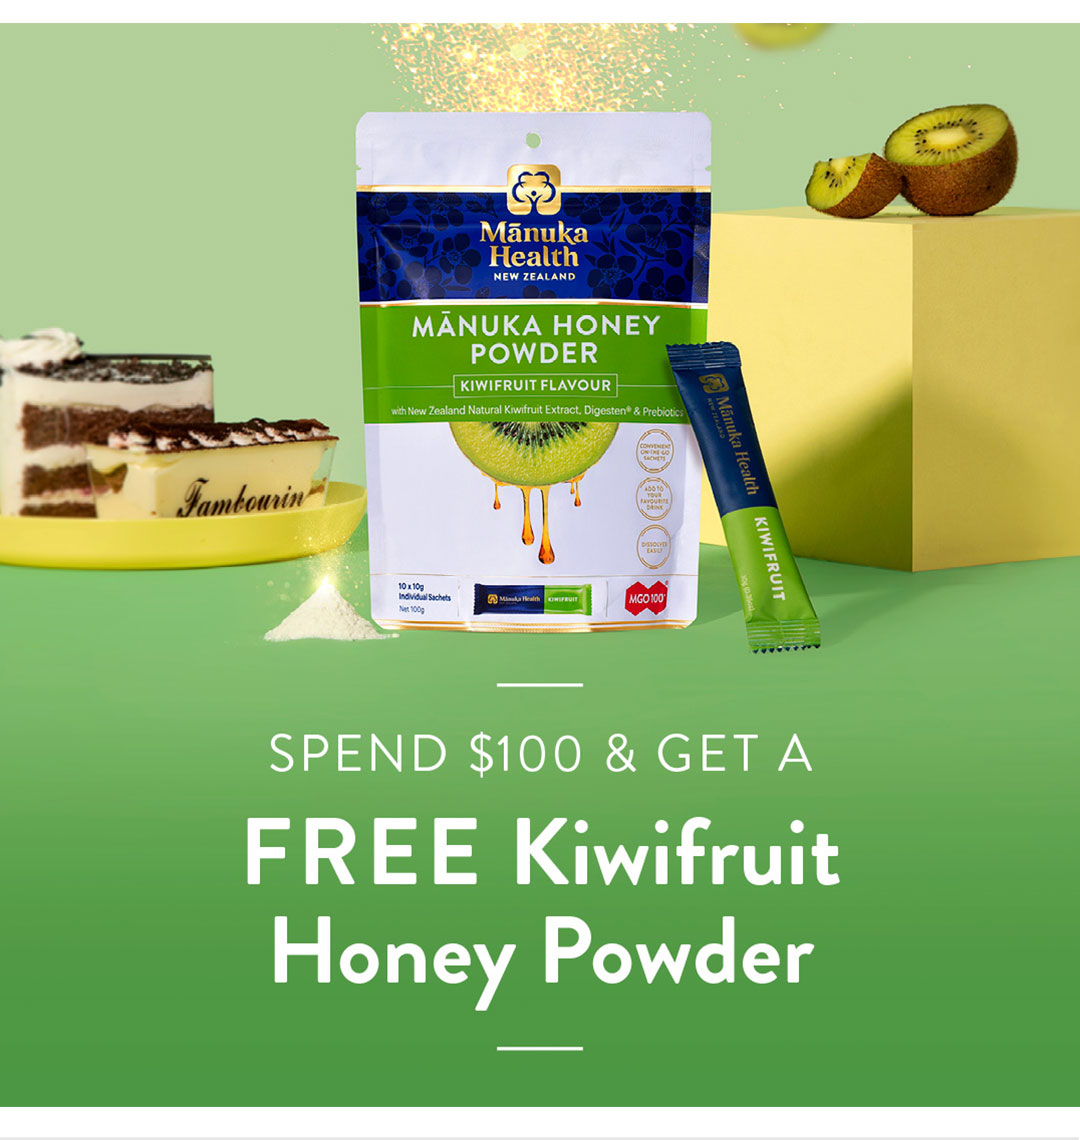 Manuka Honey powder promo